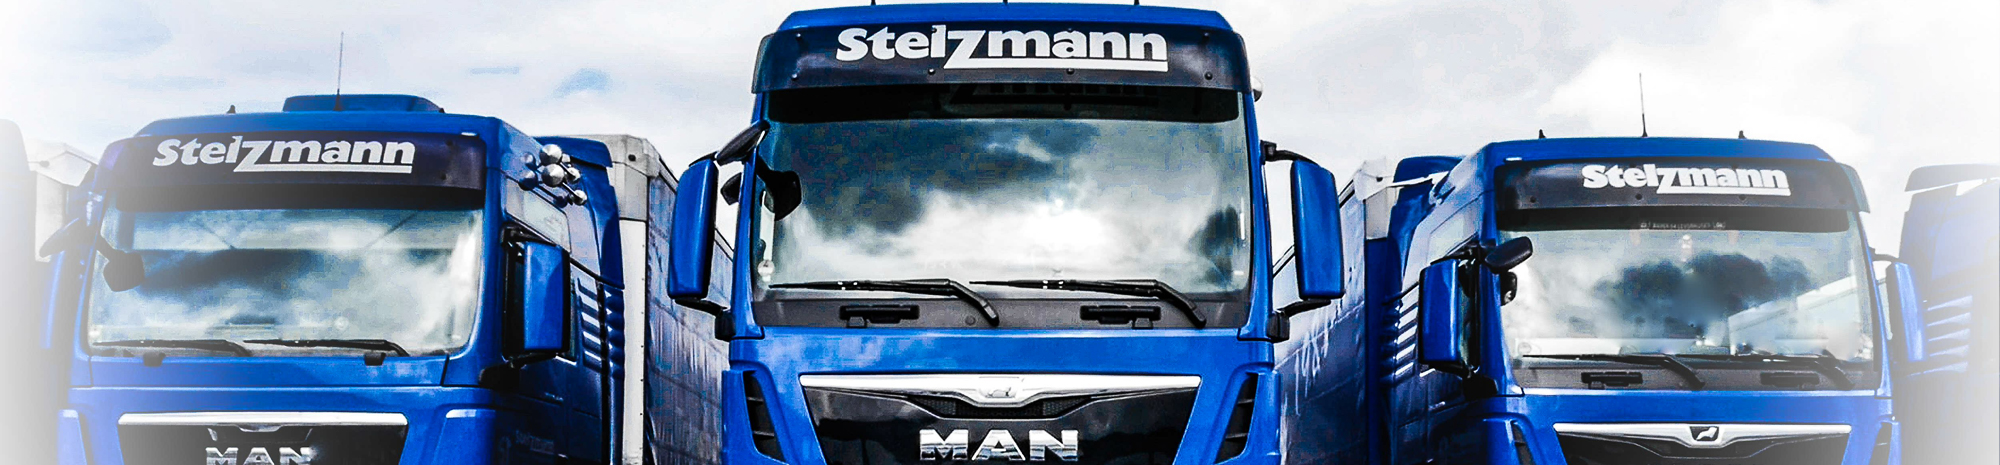 Transporte Stelzmann